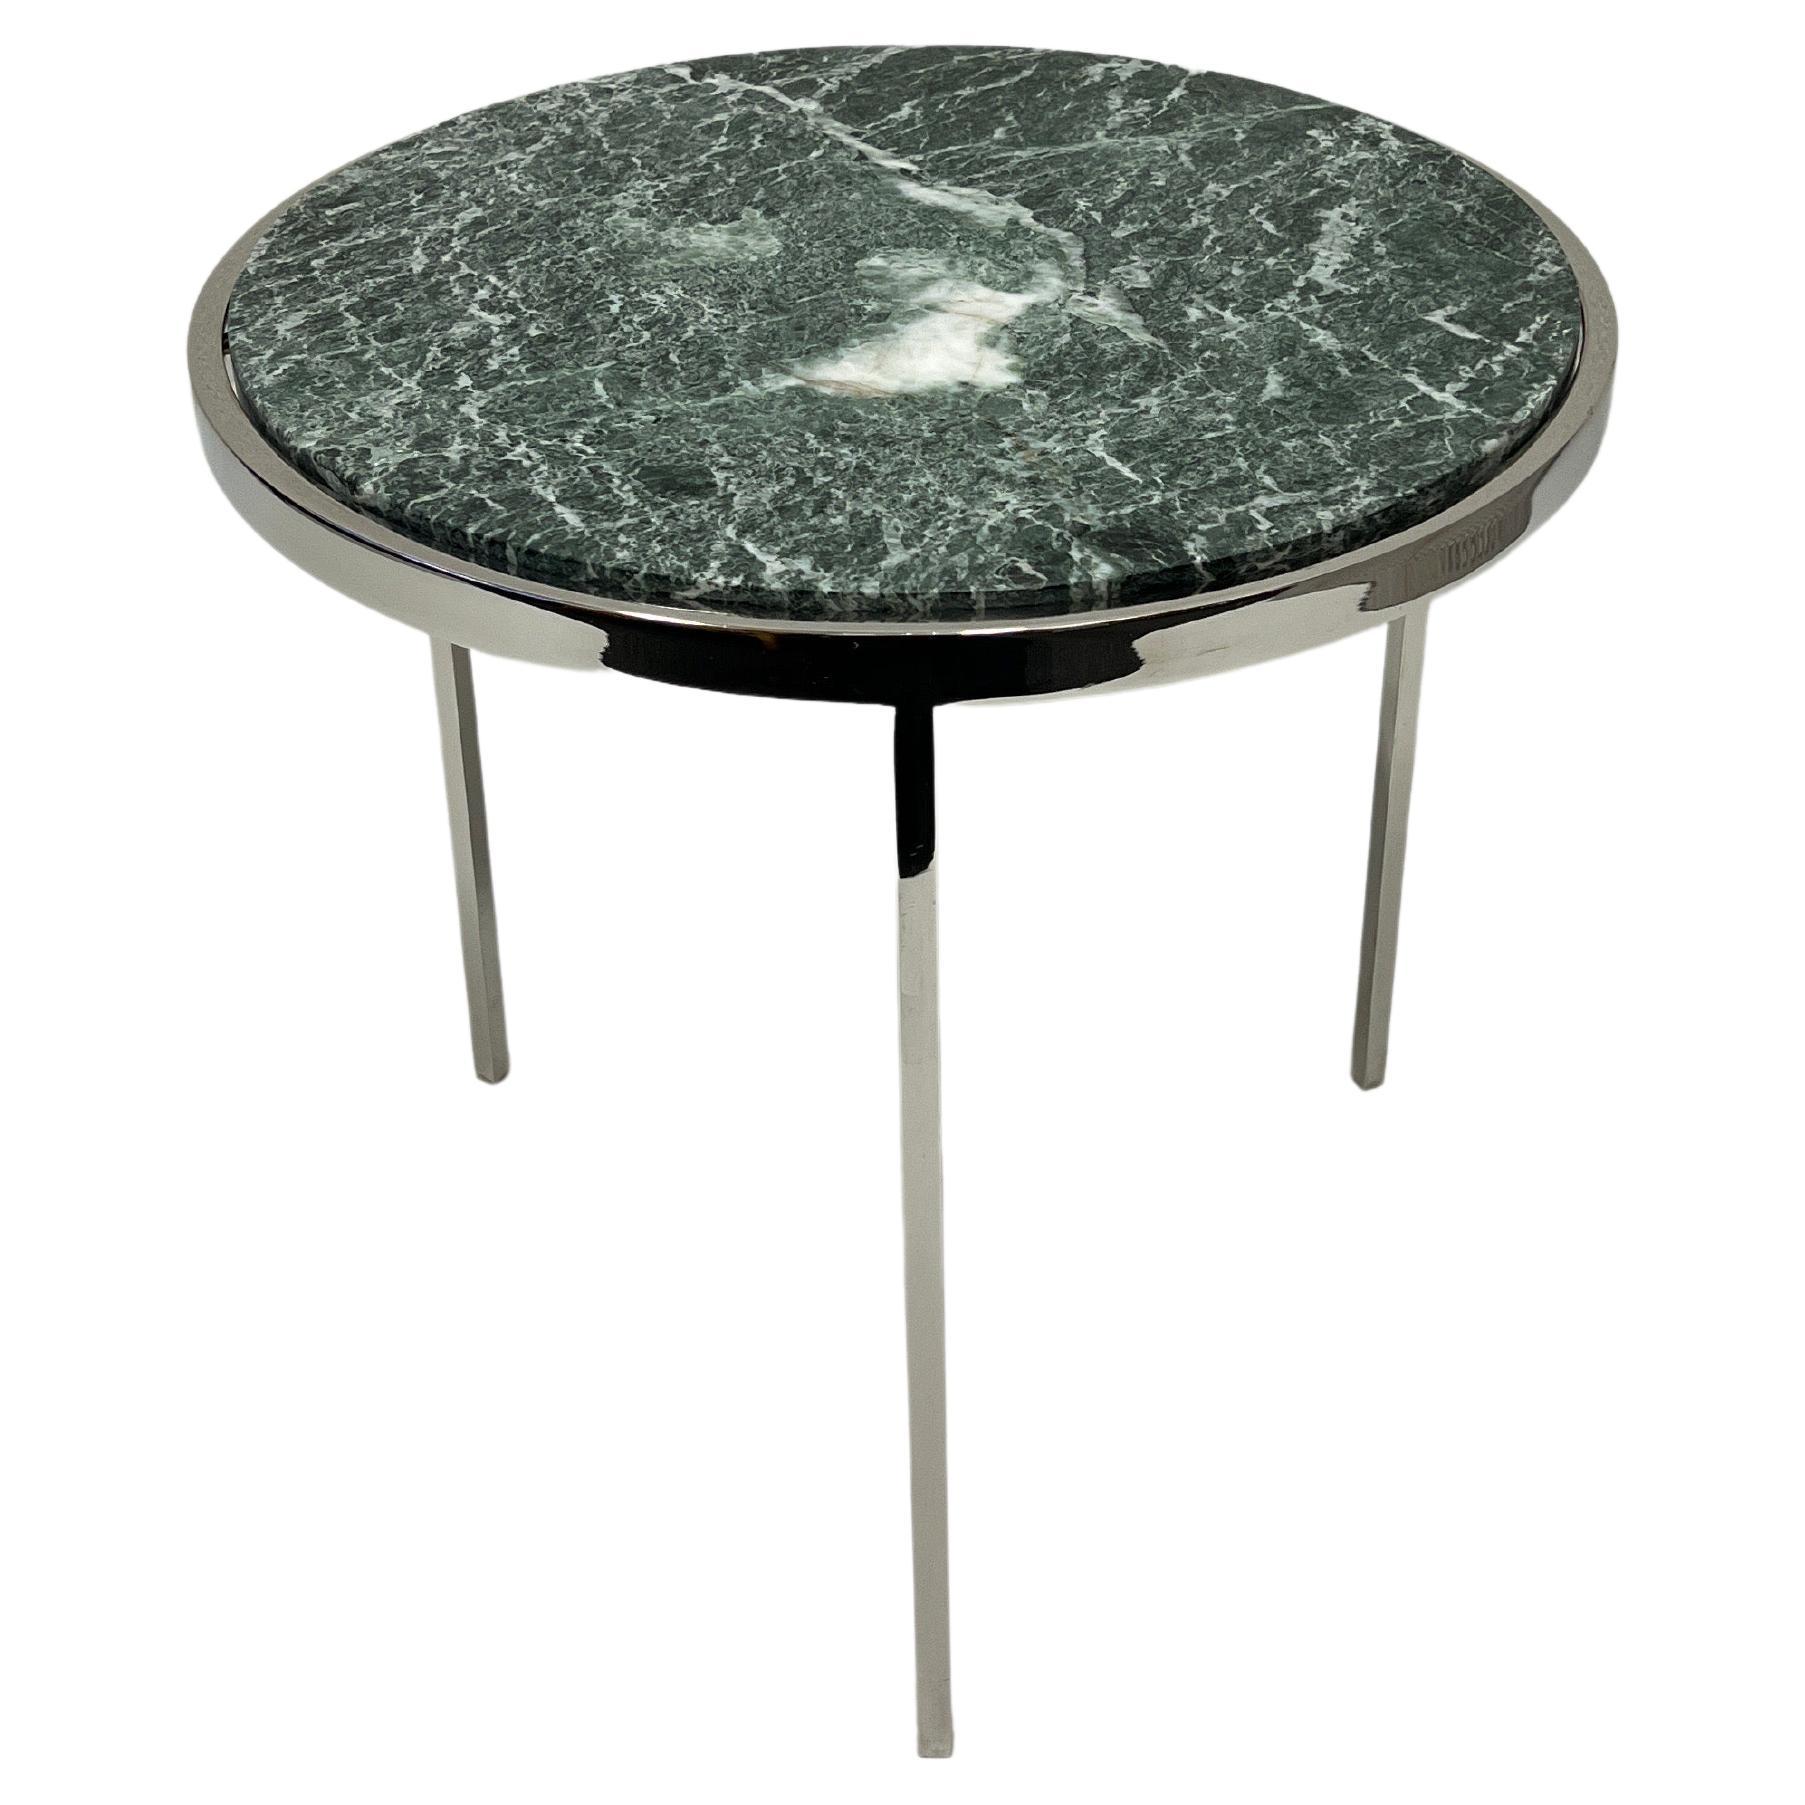 Table d'appoint tripode ronde en marbre vert et acier inoxydable poli de Brueton 